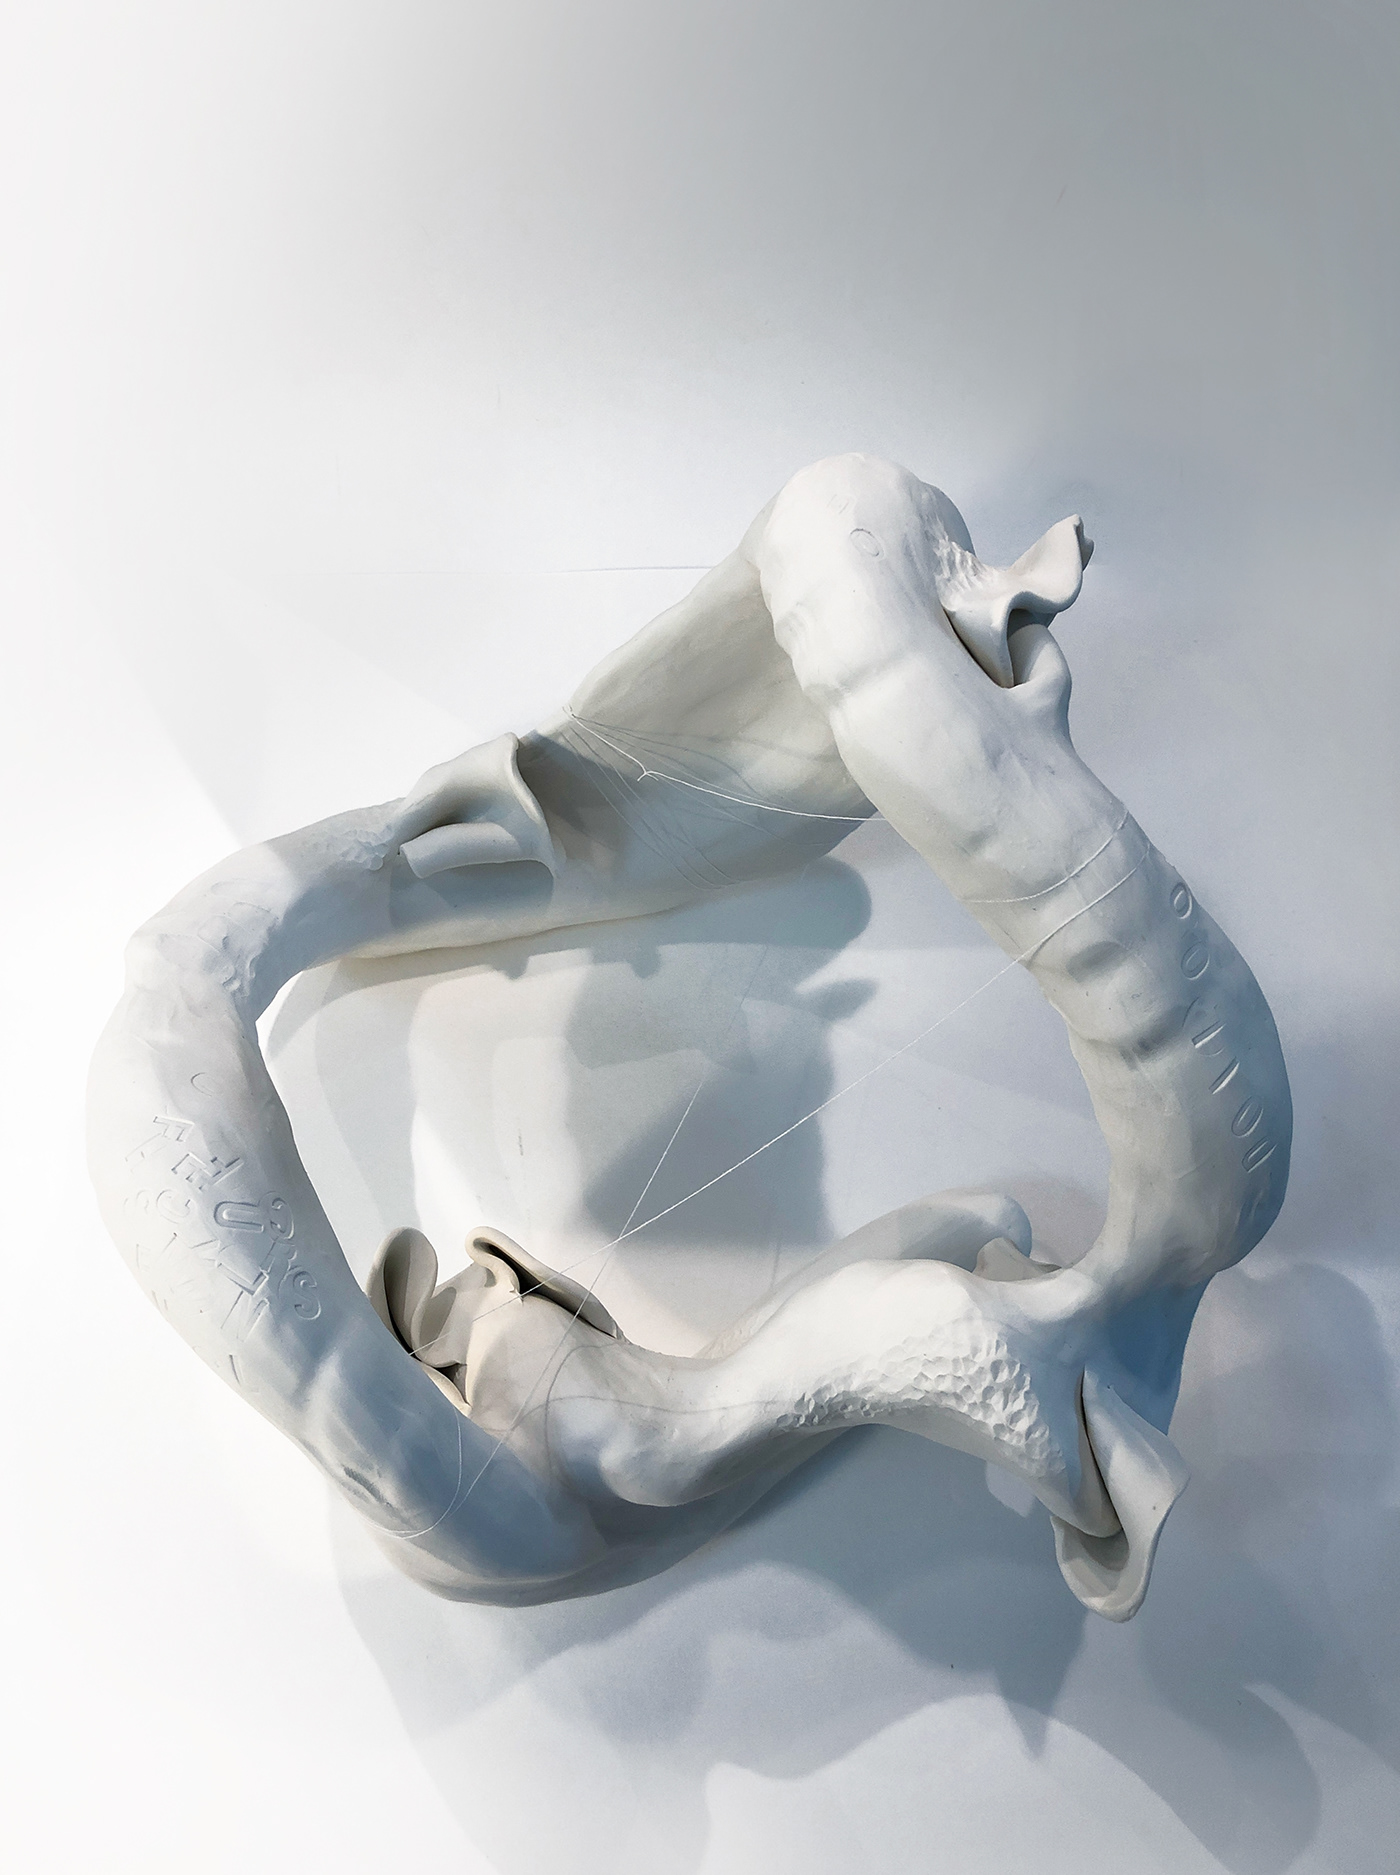 conceptual conceptual art dual monologue handmade sculpture